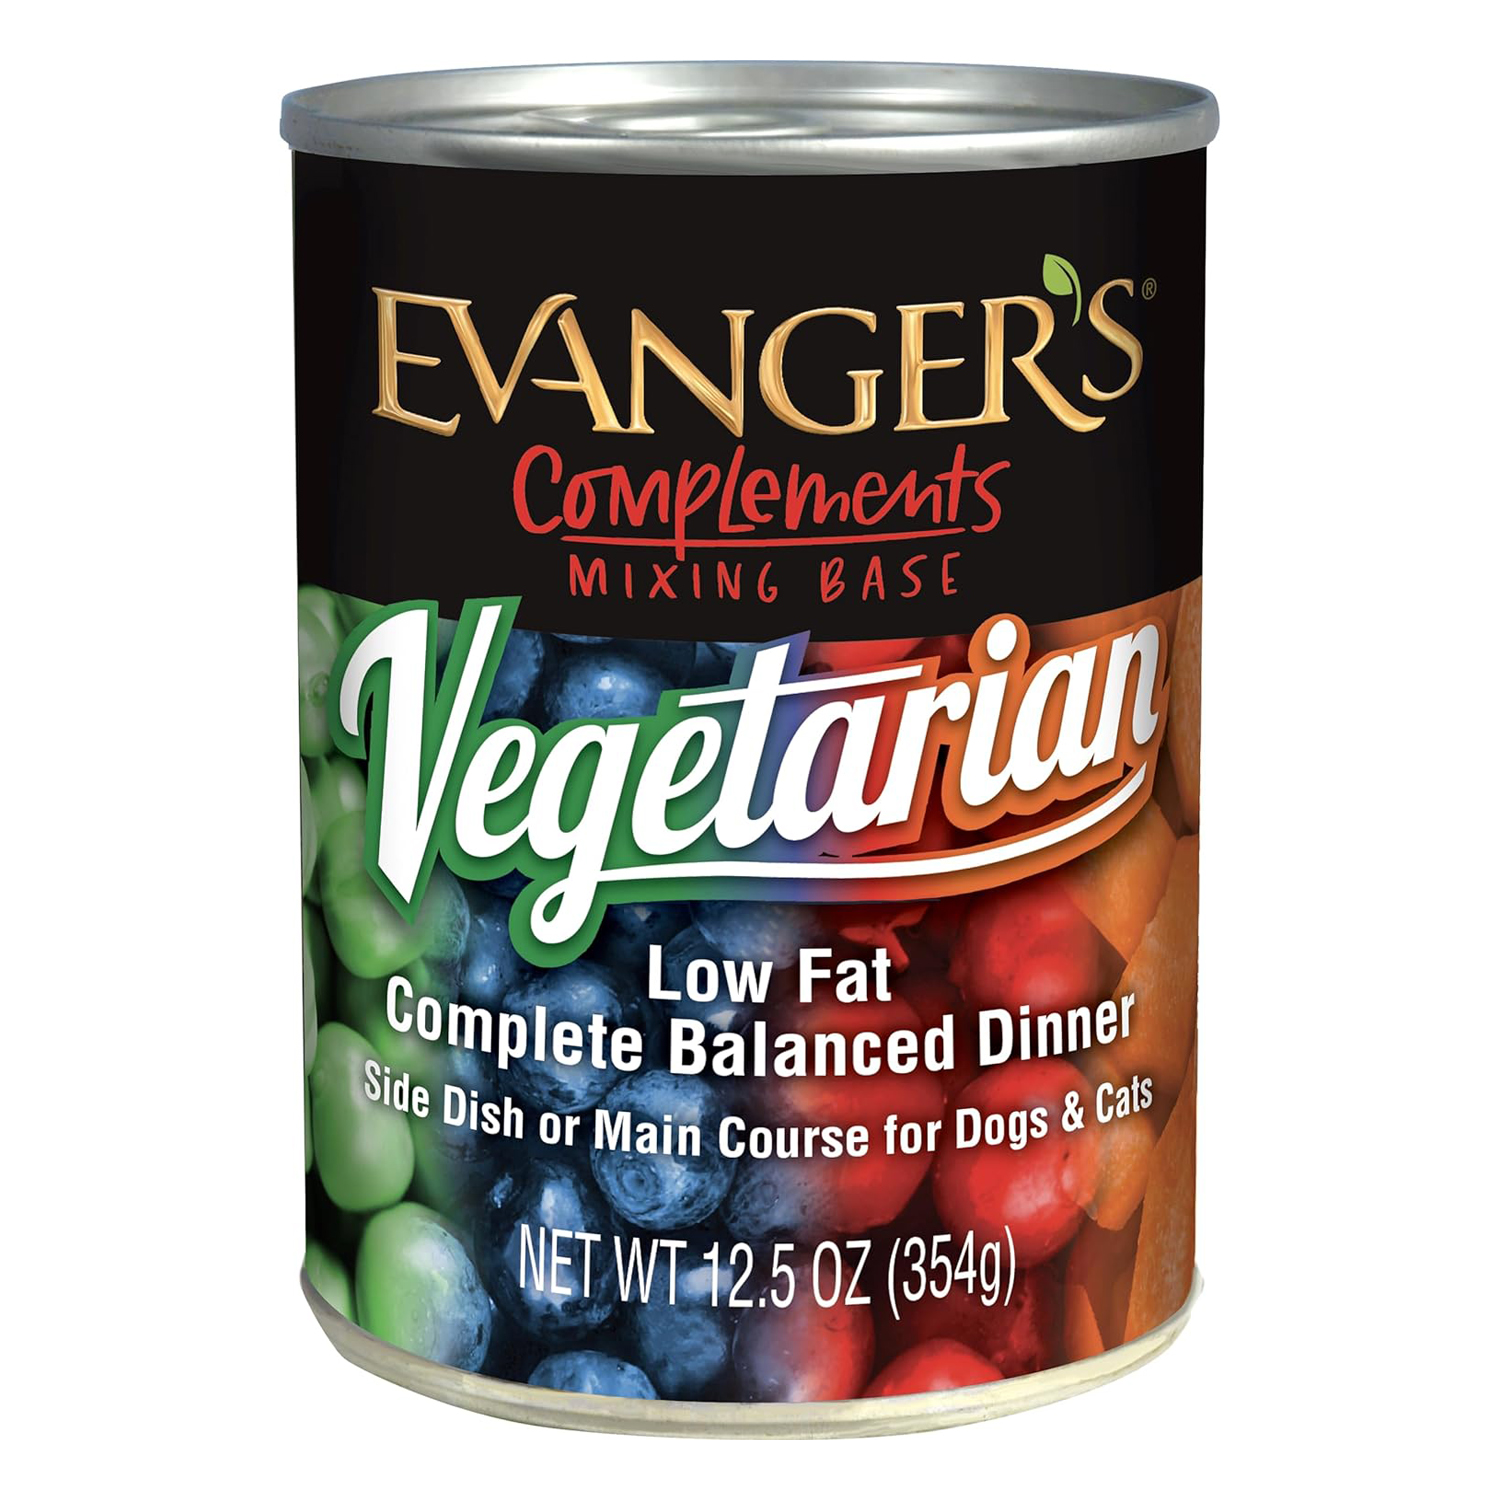 Evanger's Super Premium Low Fat Vegetarian Dinner for Dogs & Cats